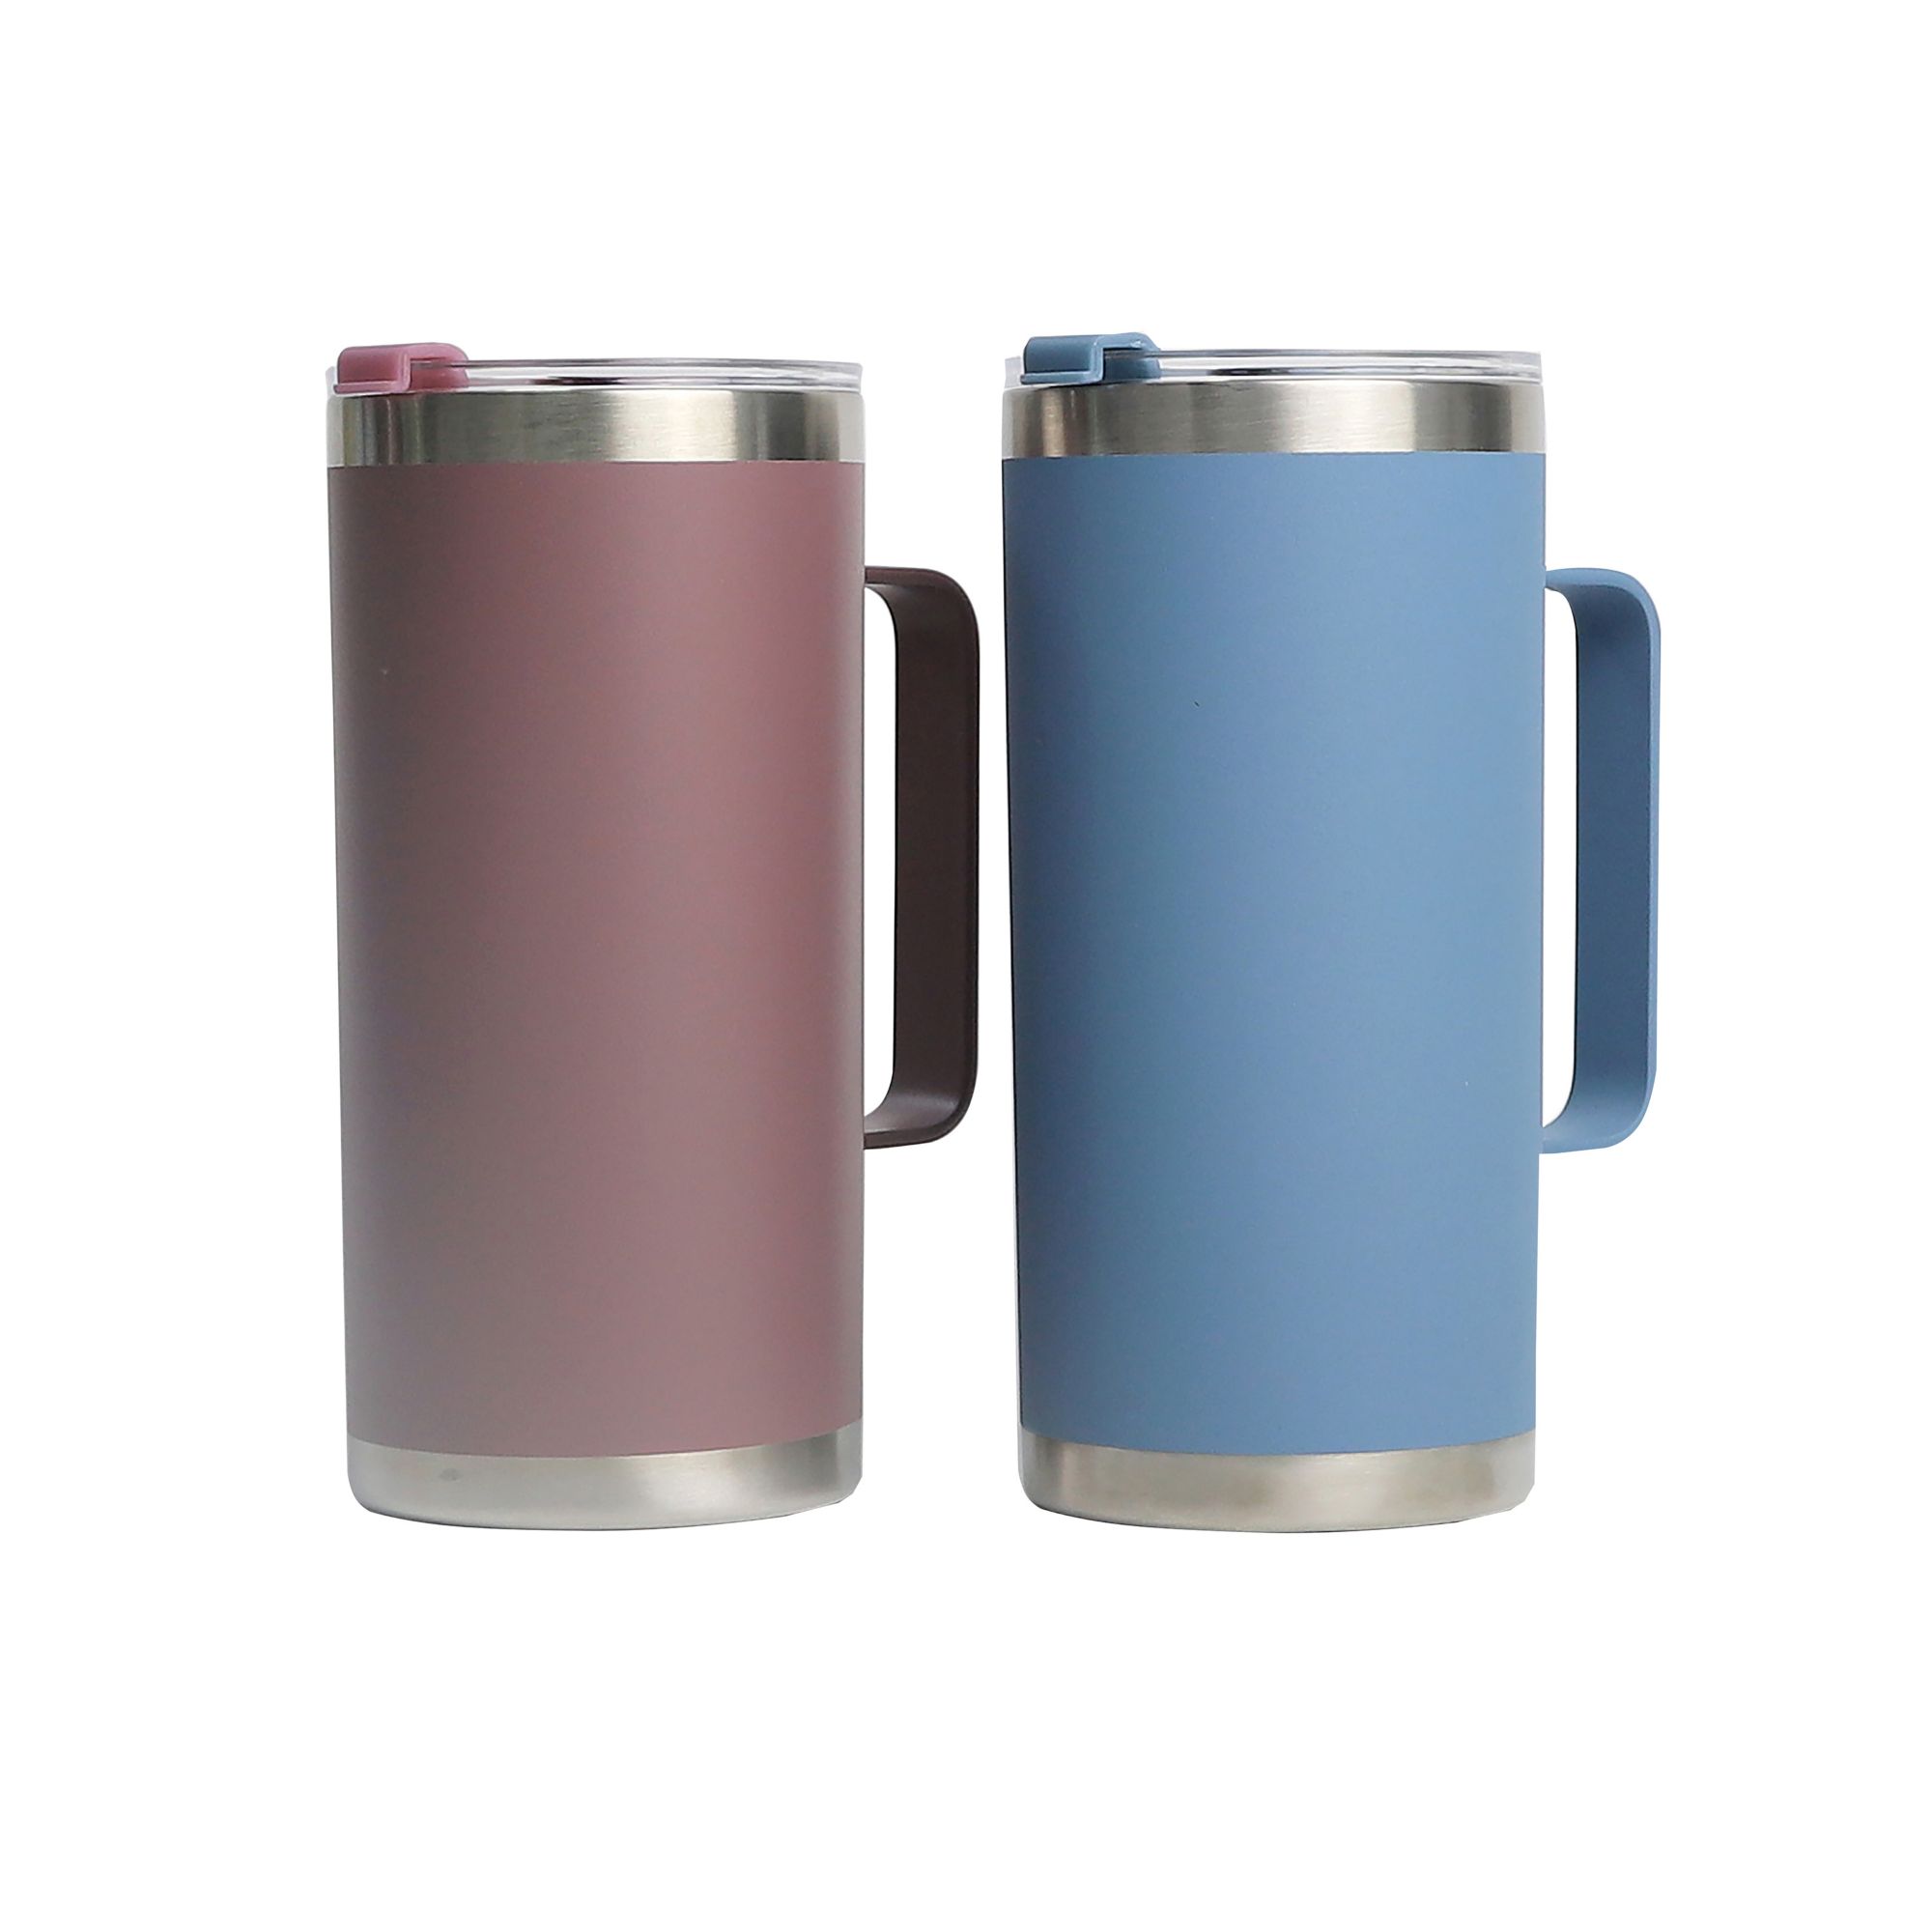 20oz Double Insulated Steel Coffee and Drink Mug